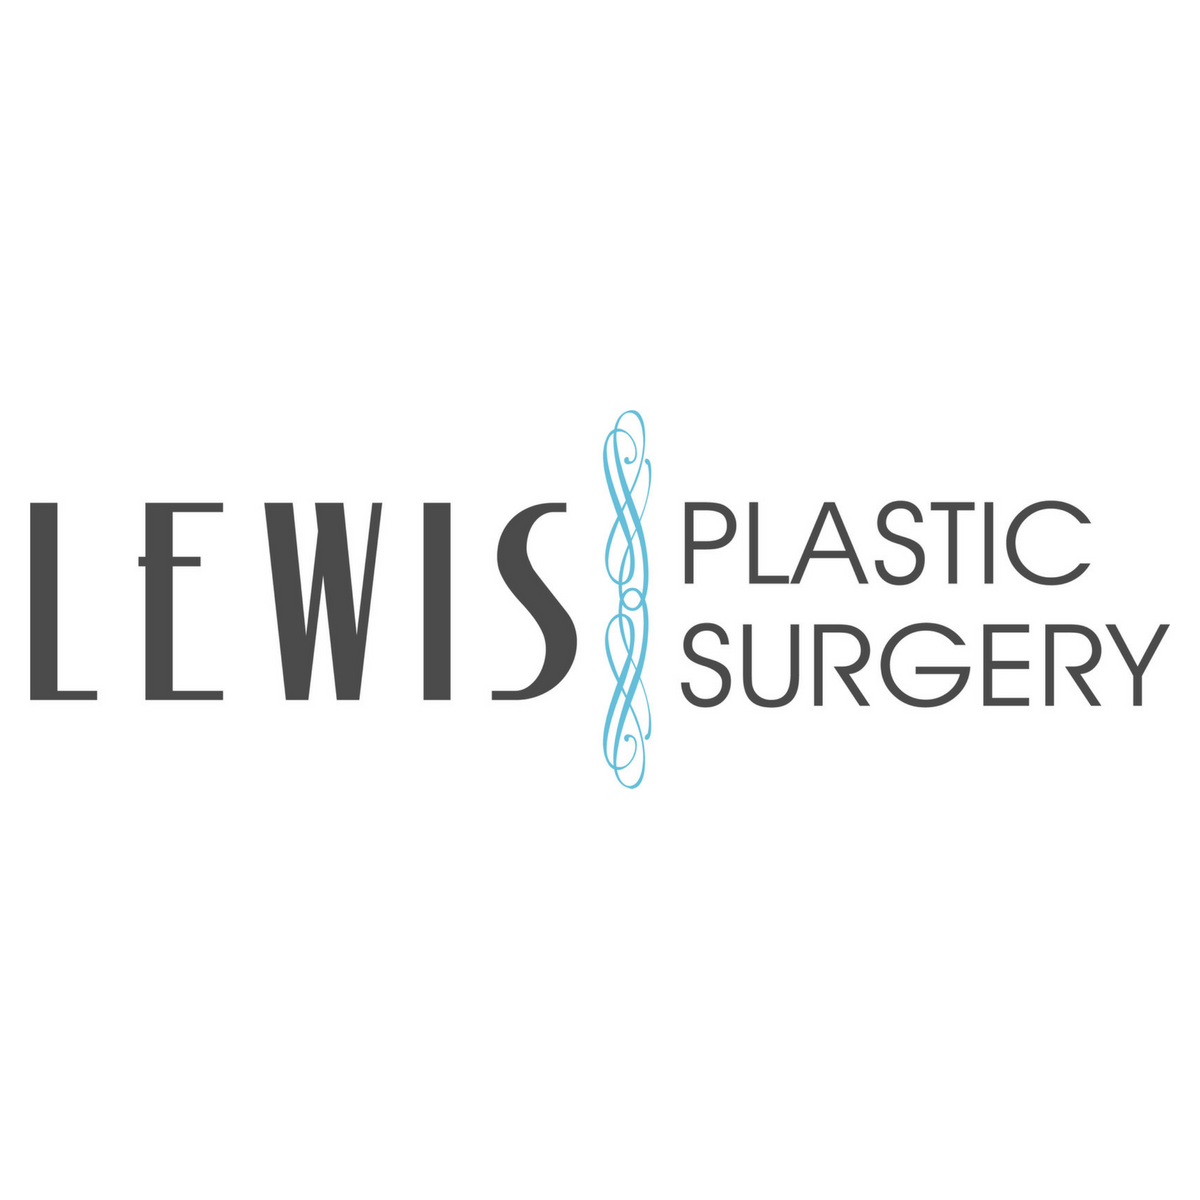 Lewis Plastic Surgery's Logo